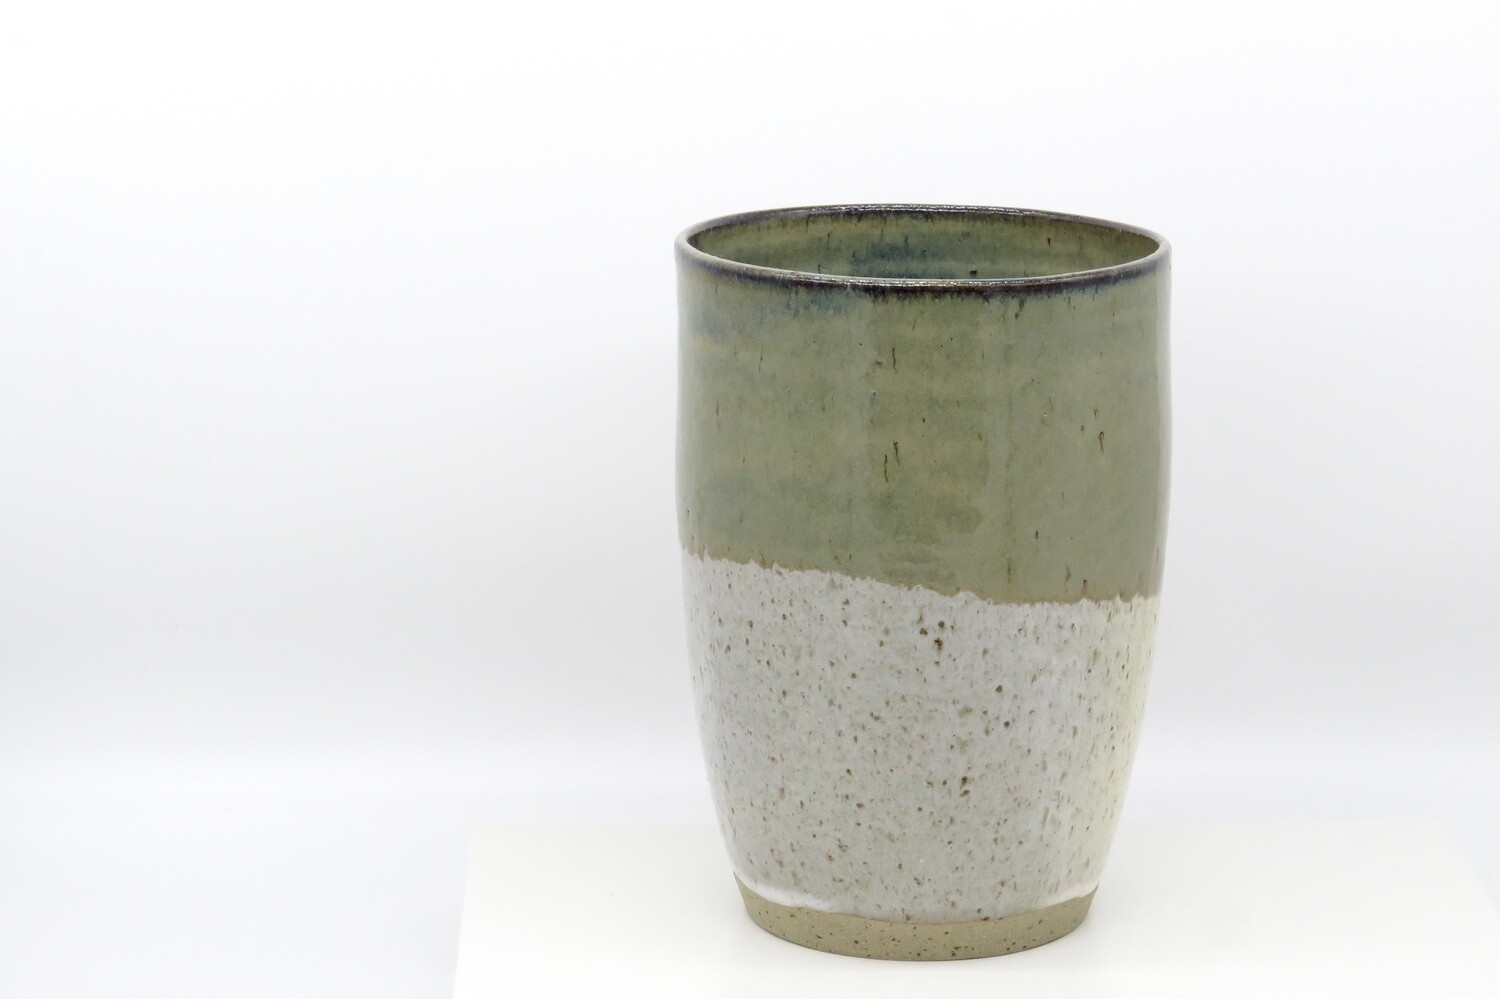 Cylindrical Vase - Flecked white and mottled green.